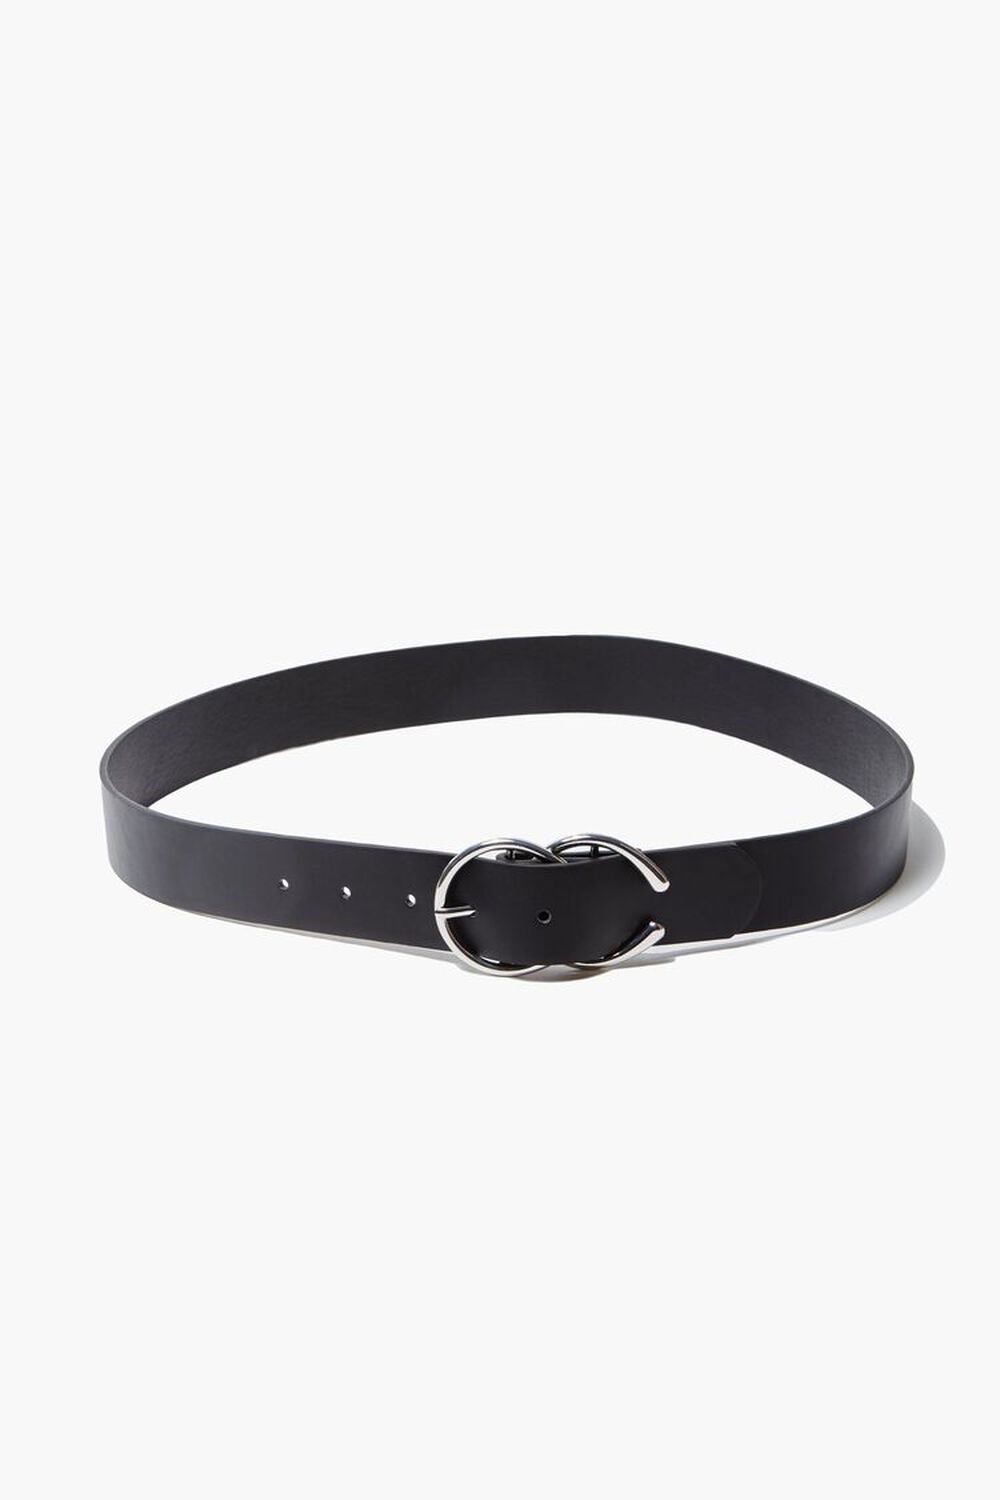 BLACK/SILVER Faux Leather Hip Belt, image 1